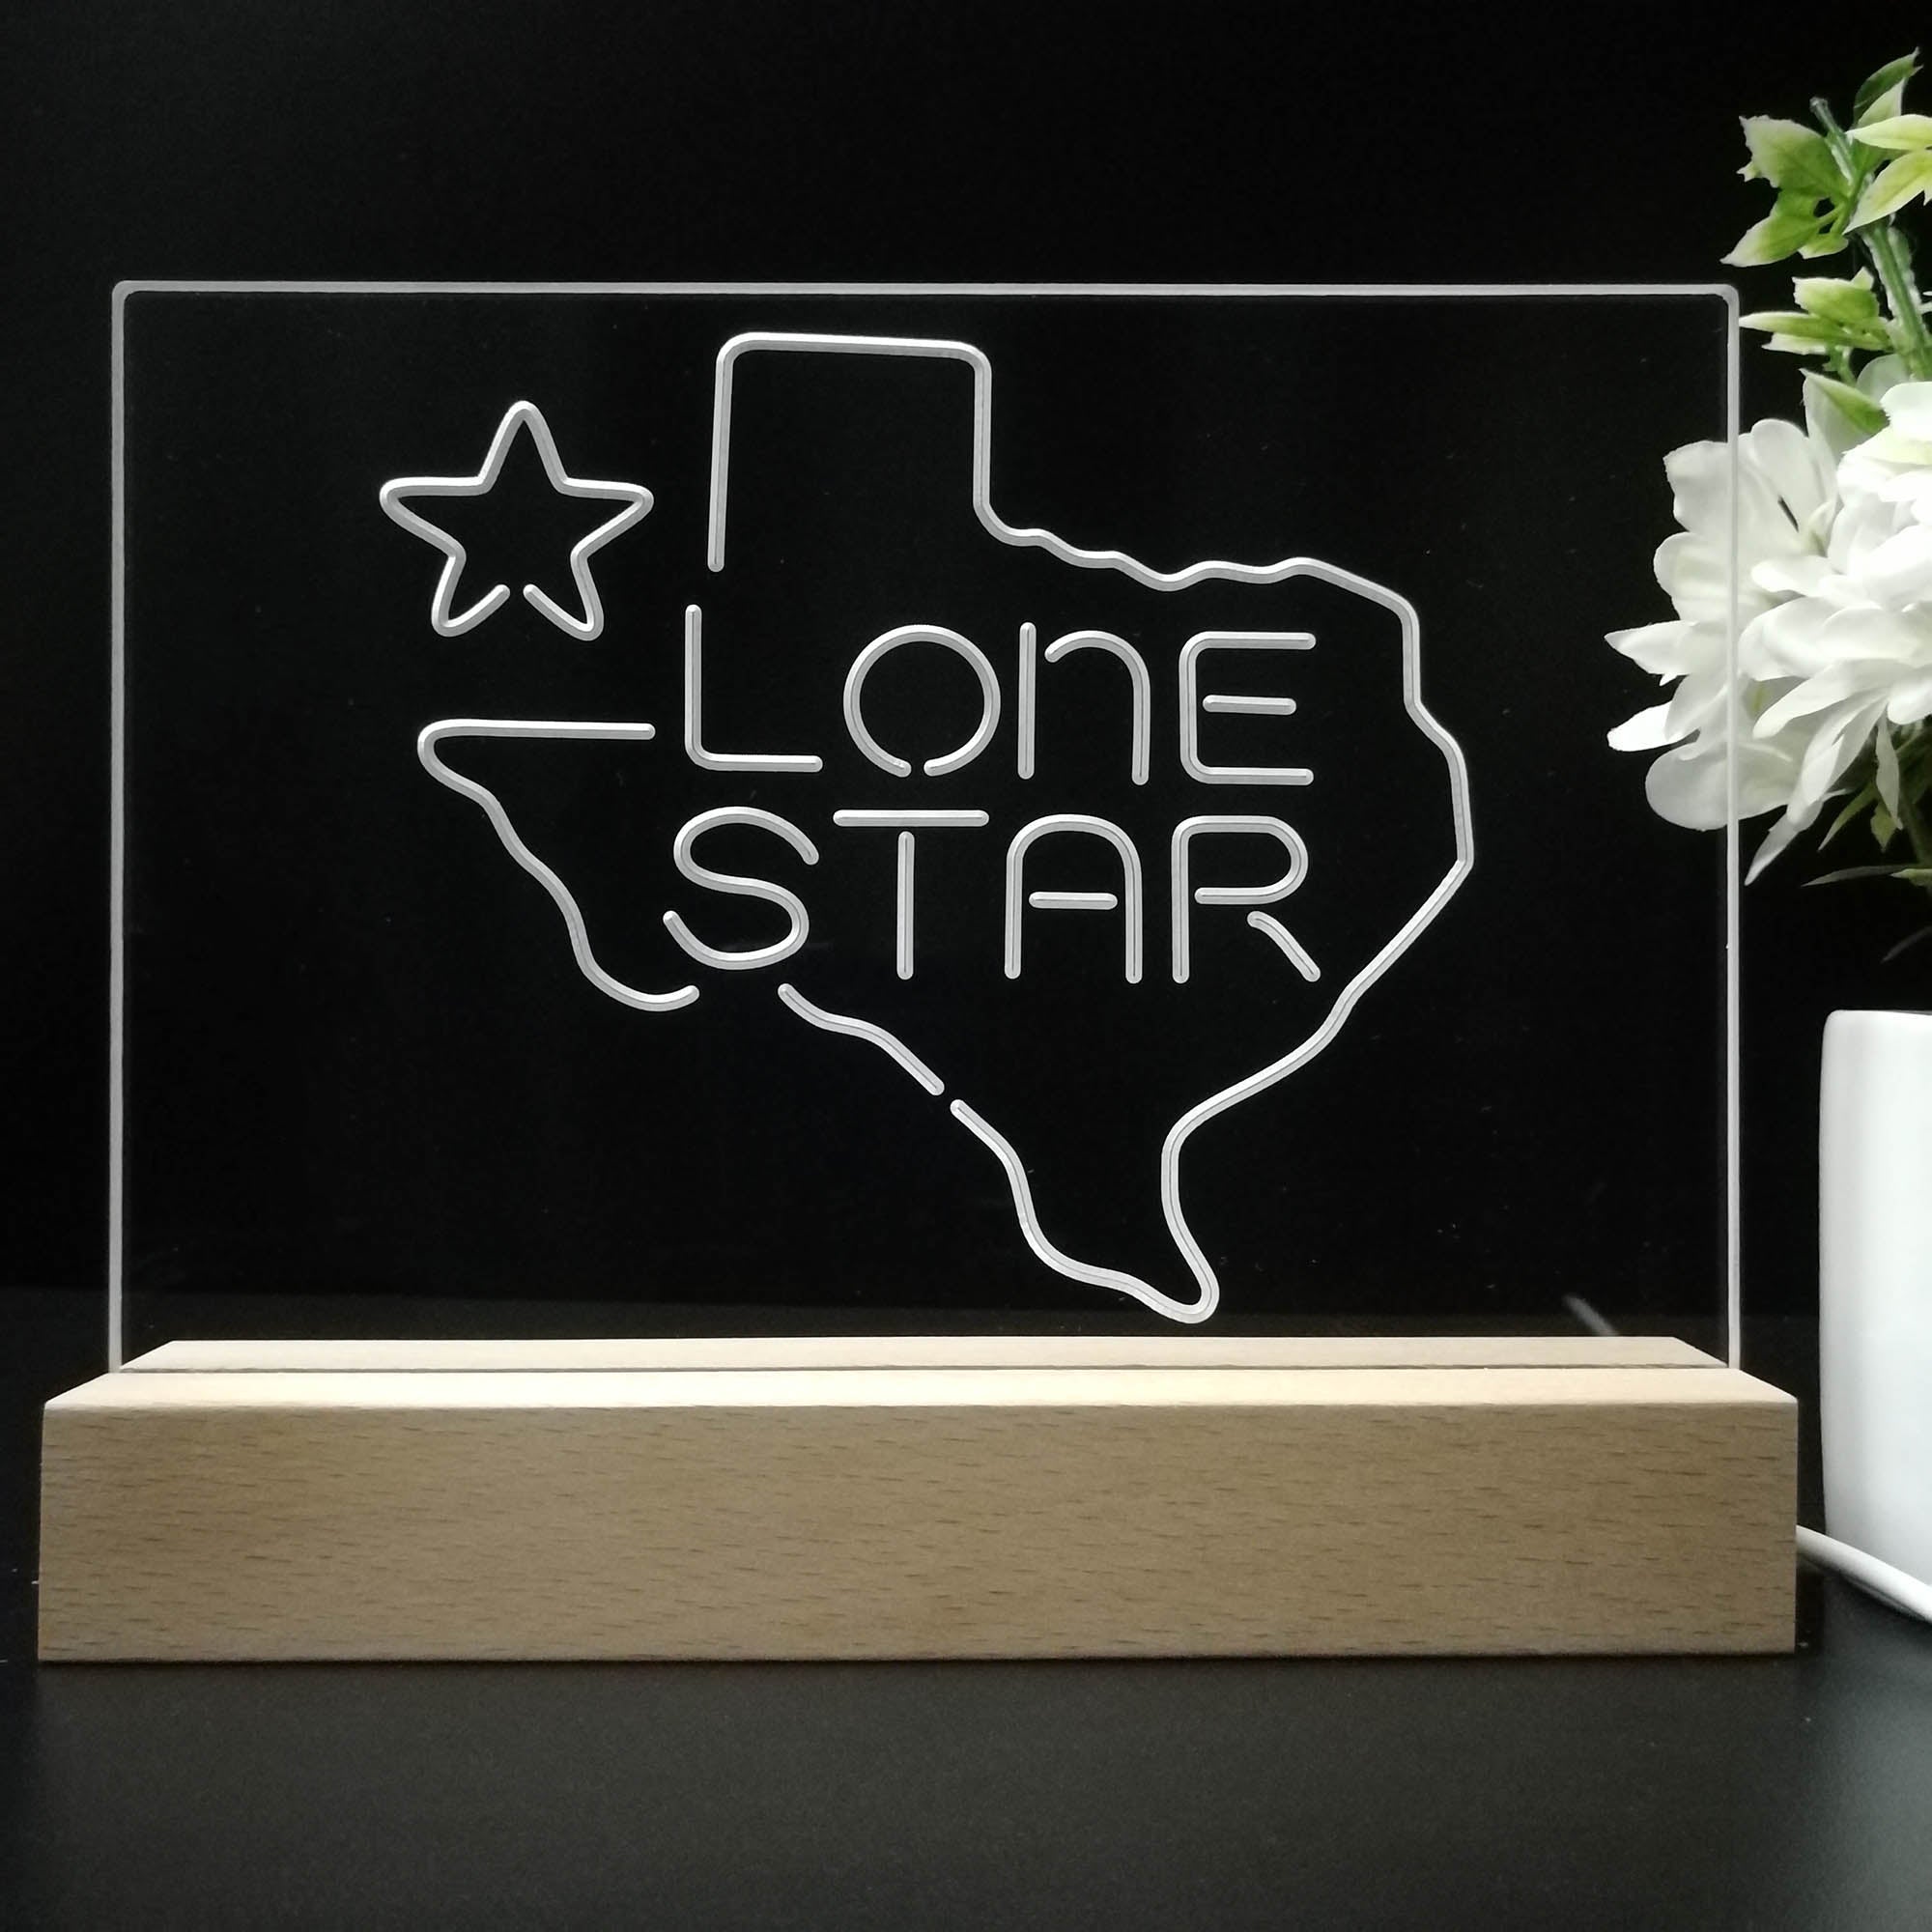 Texas Lone Star Beer Bar Night Light 3D Illusion Lamp Home Bar Decor